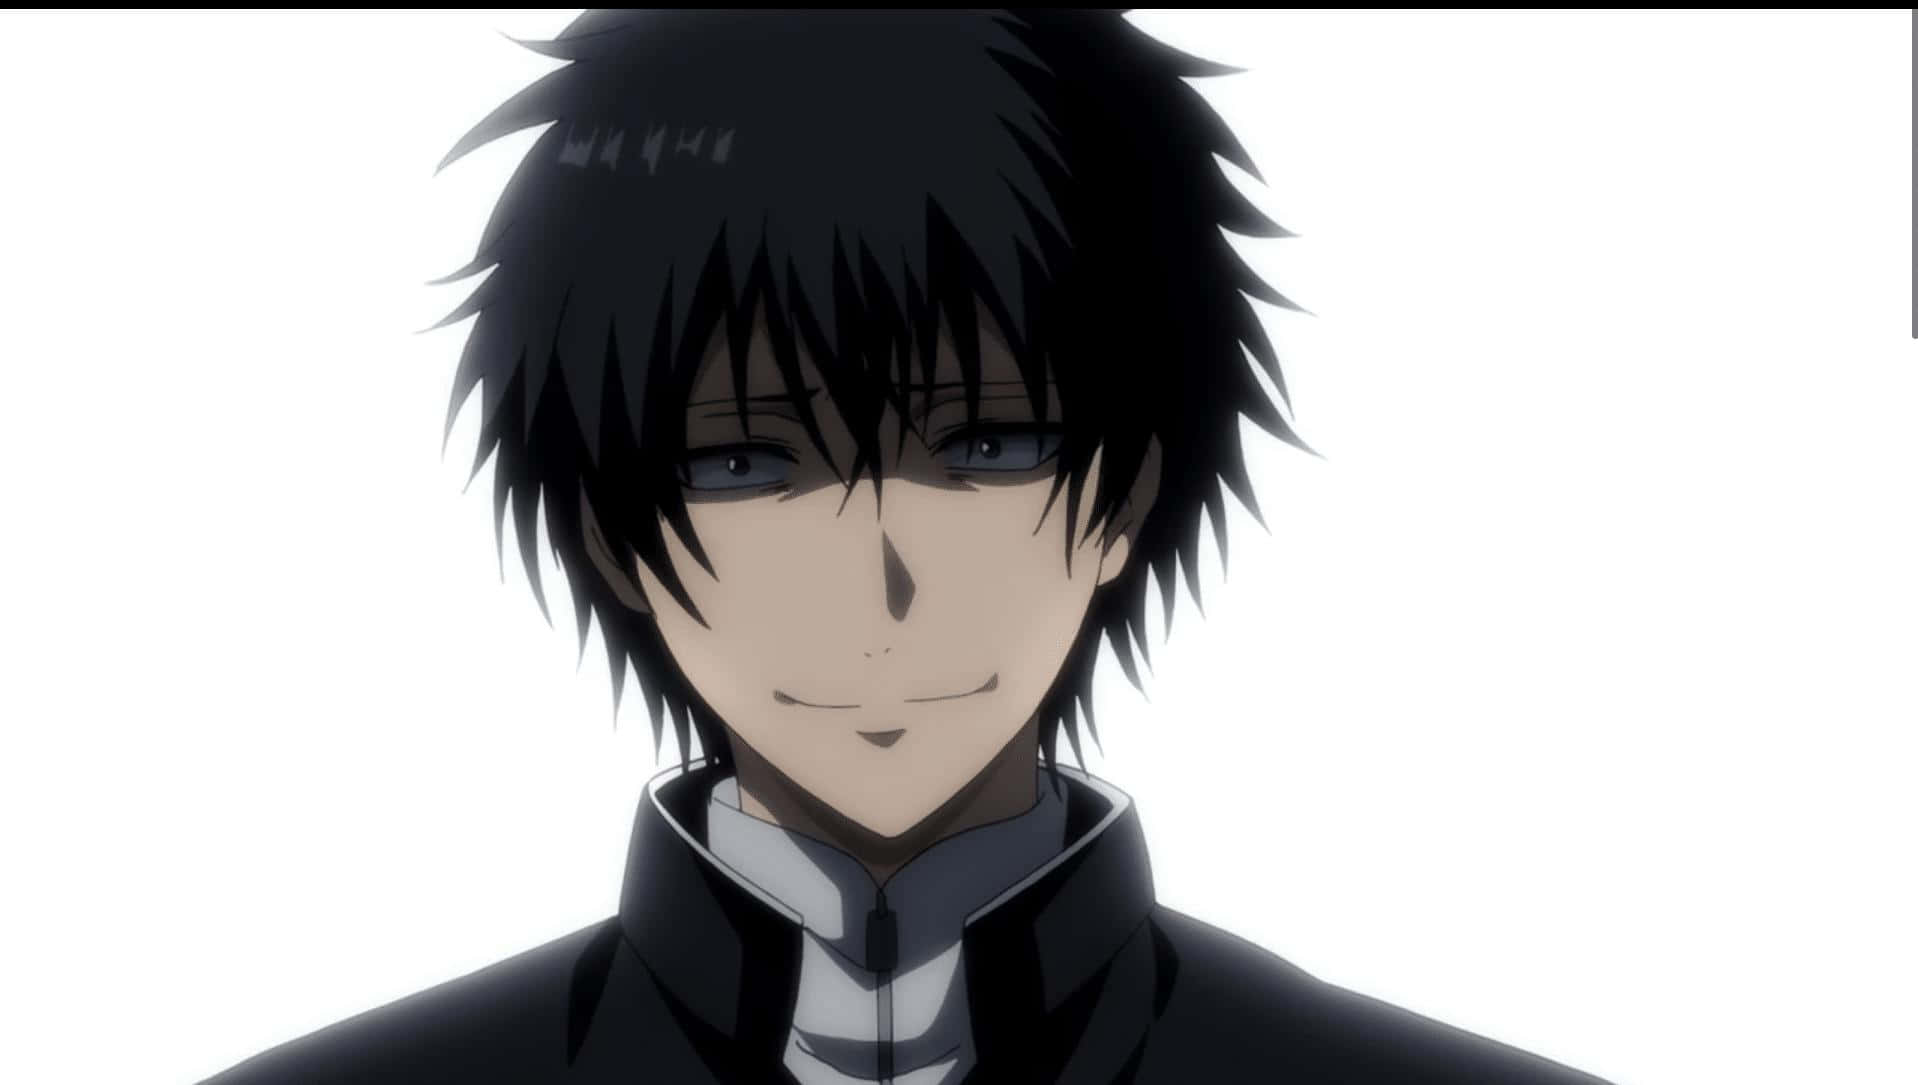 Smiling Anime Boy Black Hair Wallpaper